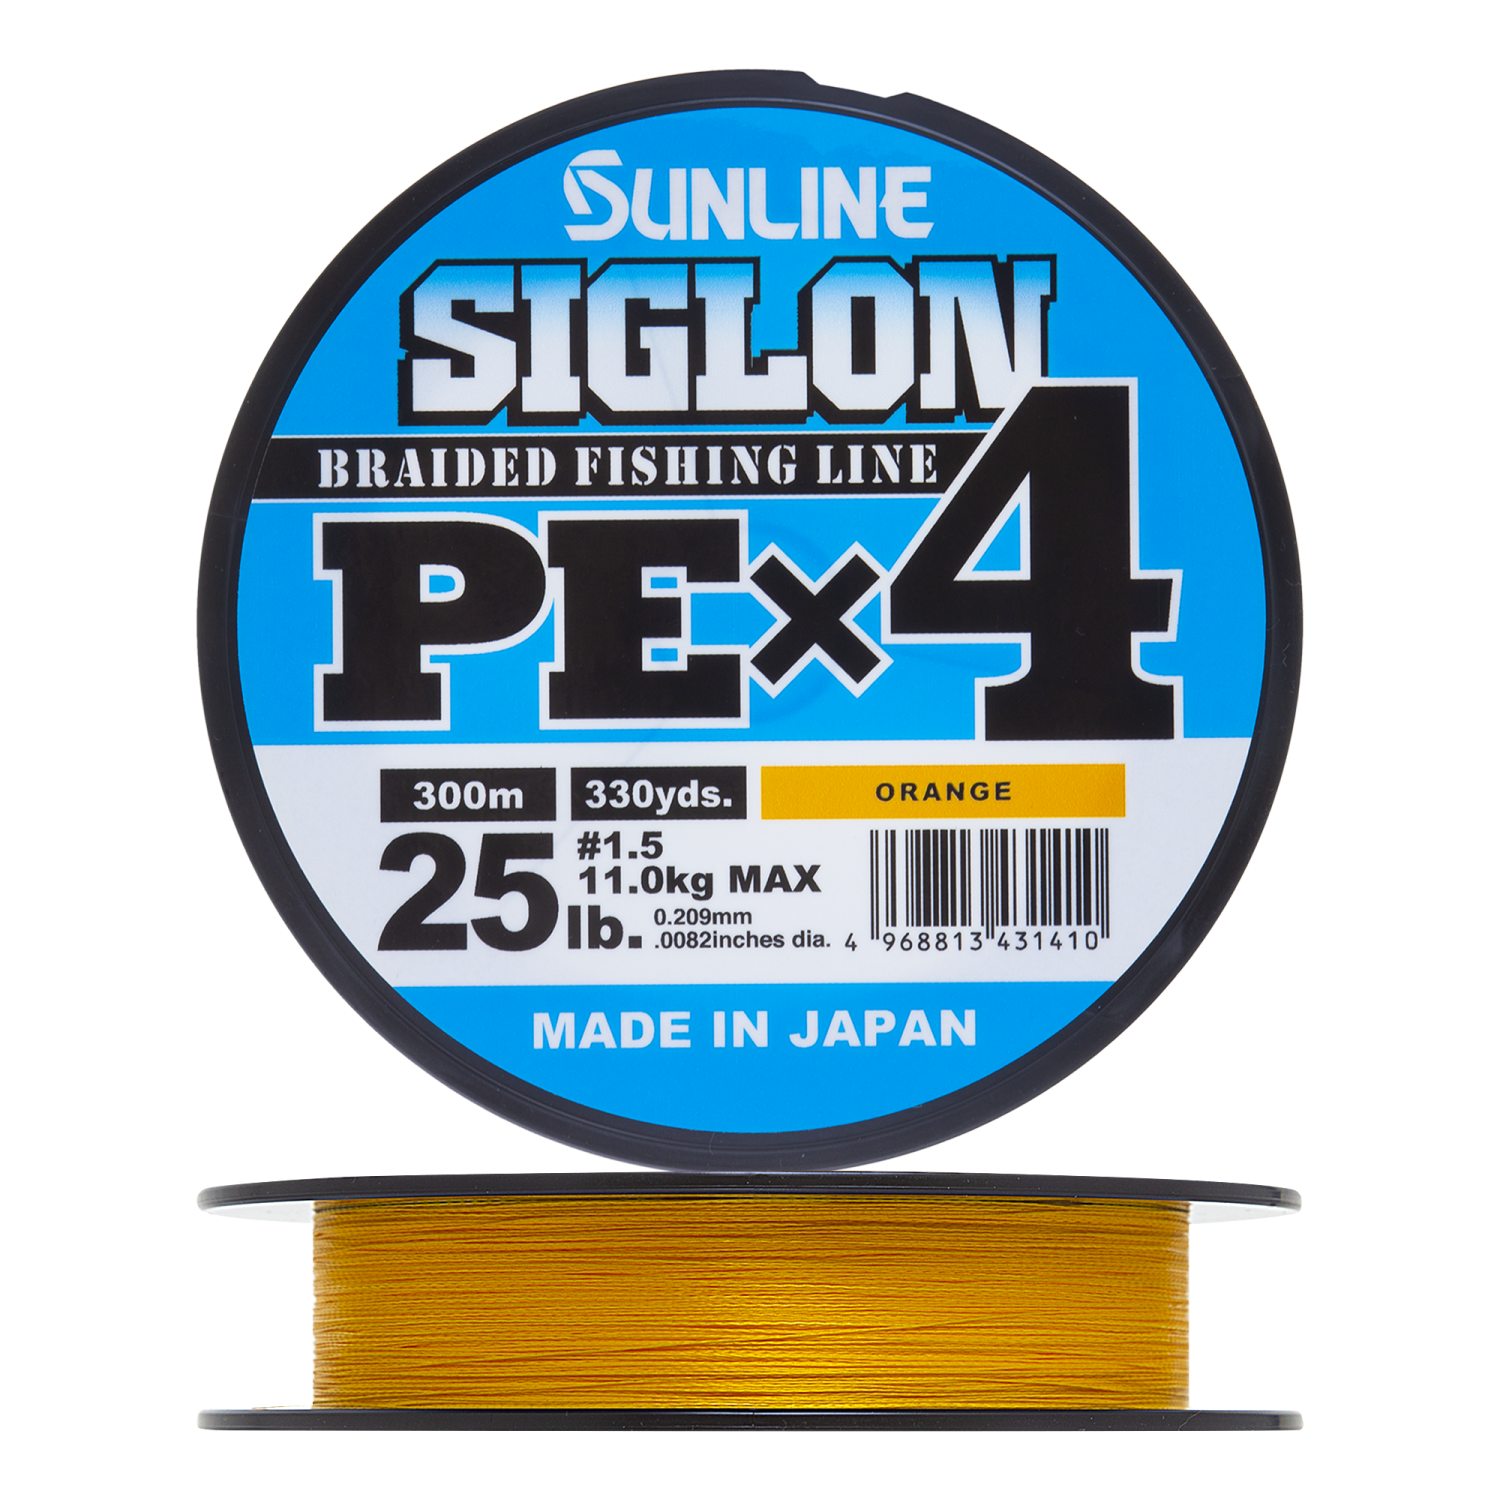 Шнур плетеный Sunline Siglon PE X4 #1,5 0,209мм 300м (orange)